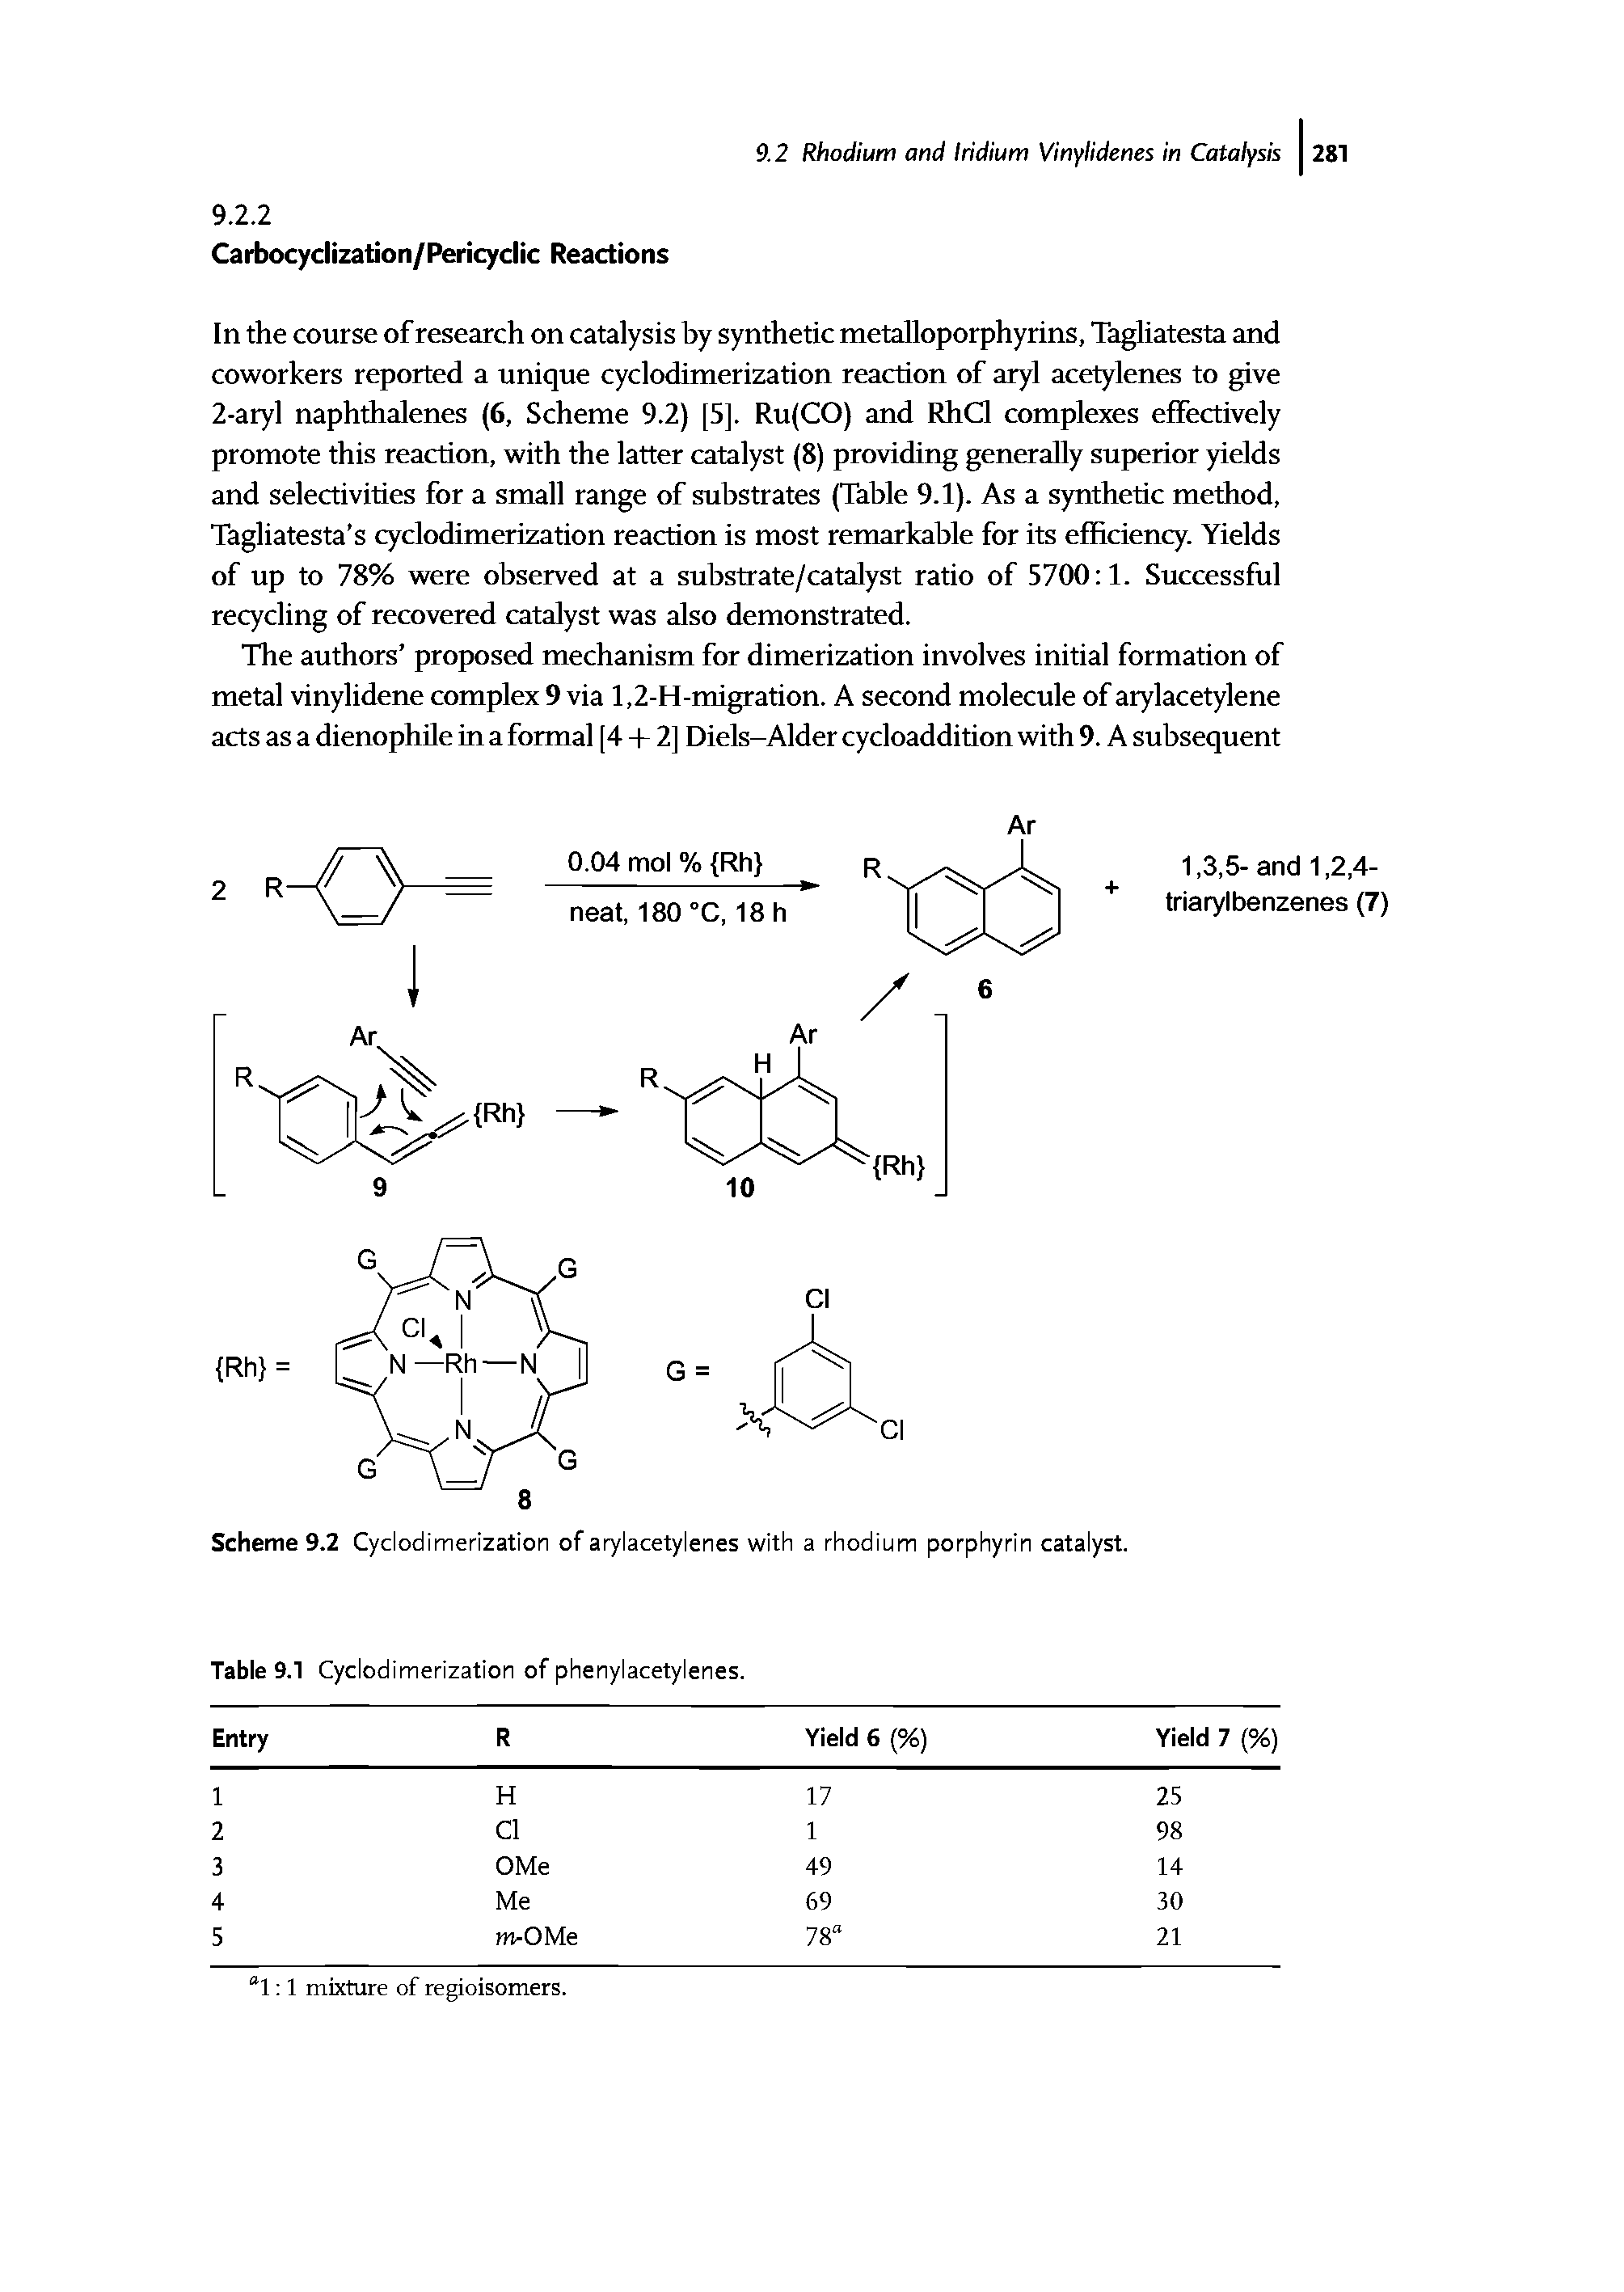 Scheme 9.2 Cyclodimerization of arylacetylenes with a rhodium porphyrin catalyst.